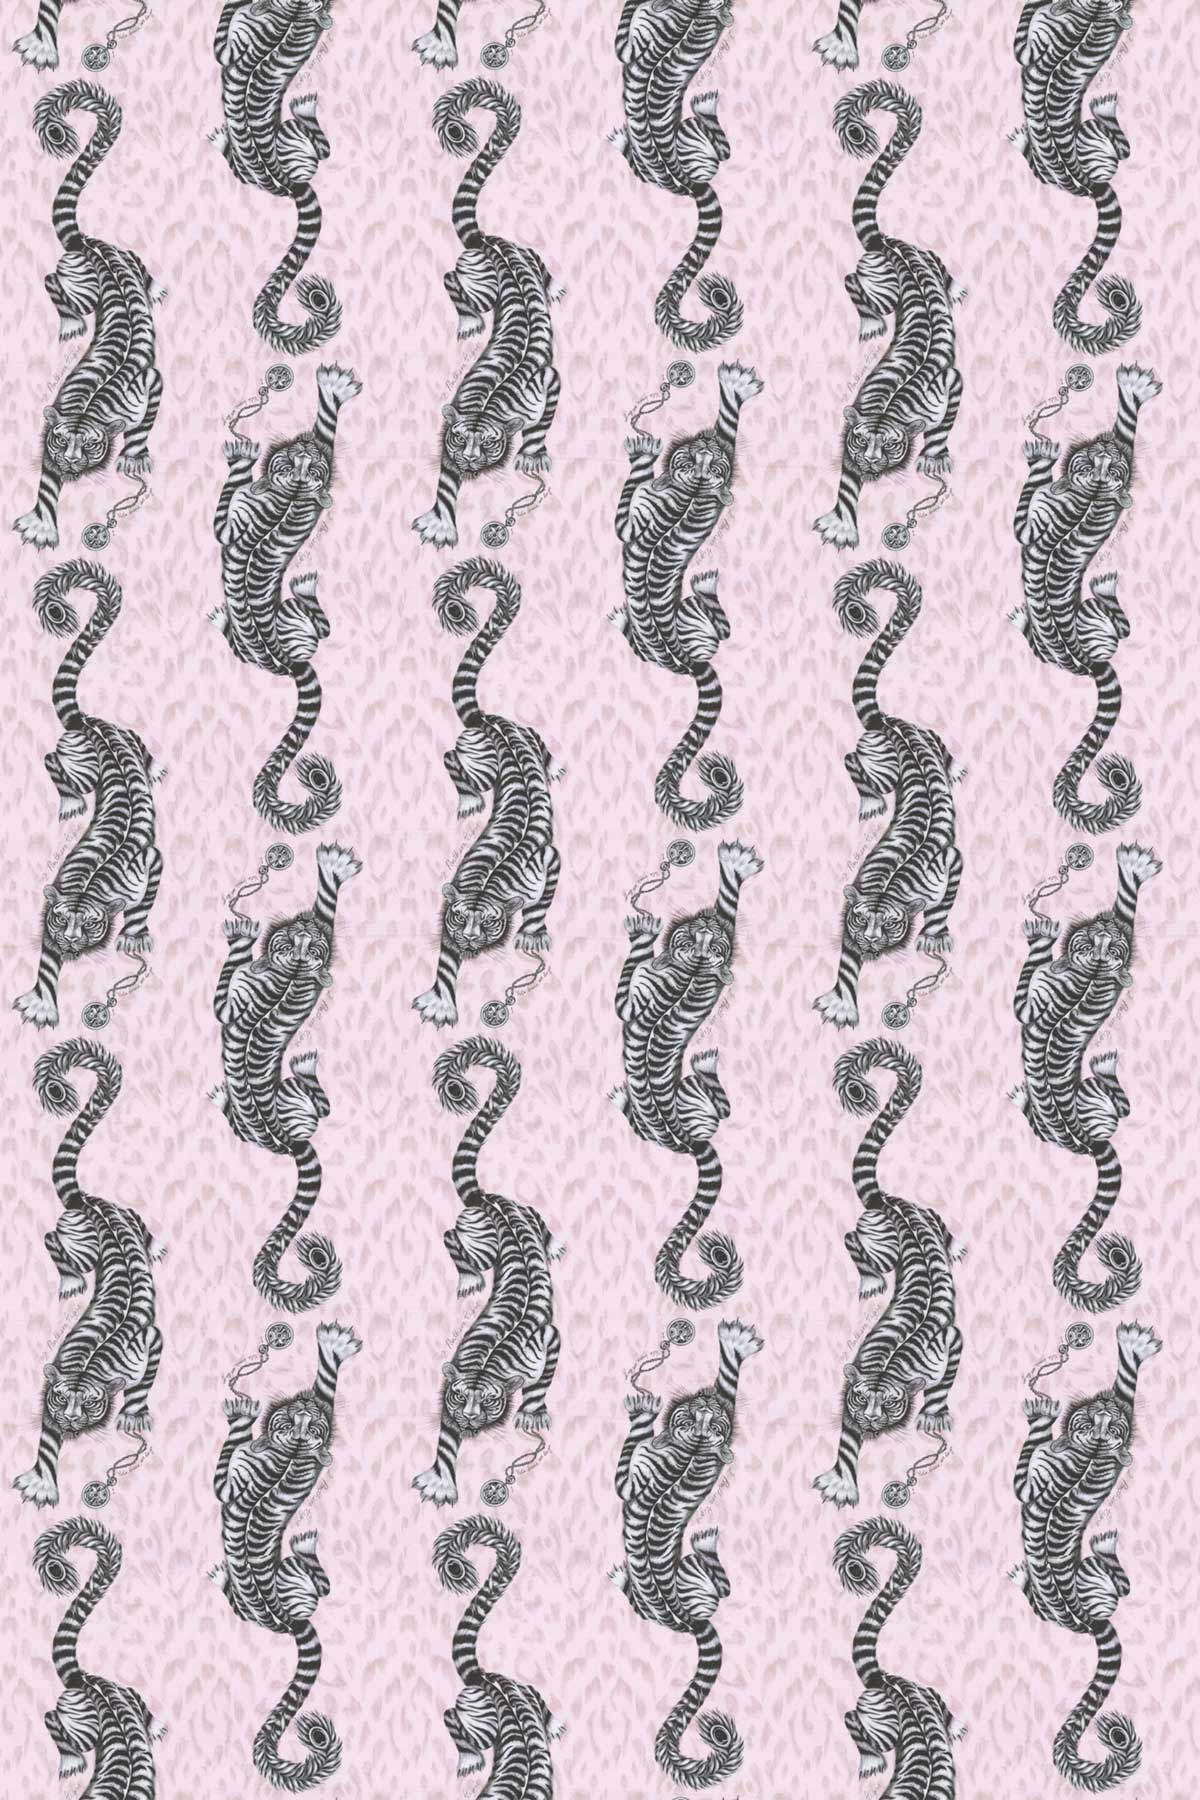 Tigris Fabric - Pink - by Emma J Shipley